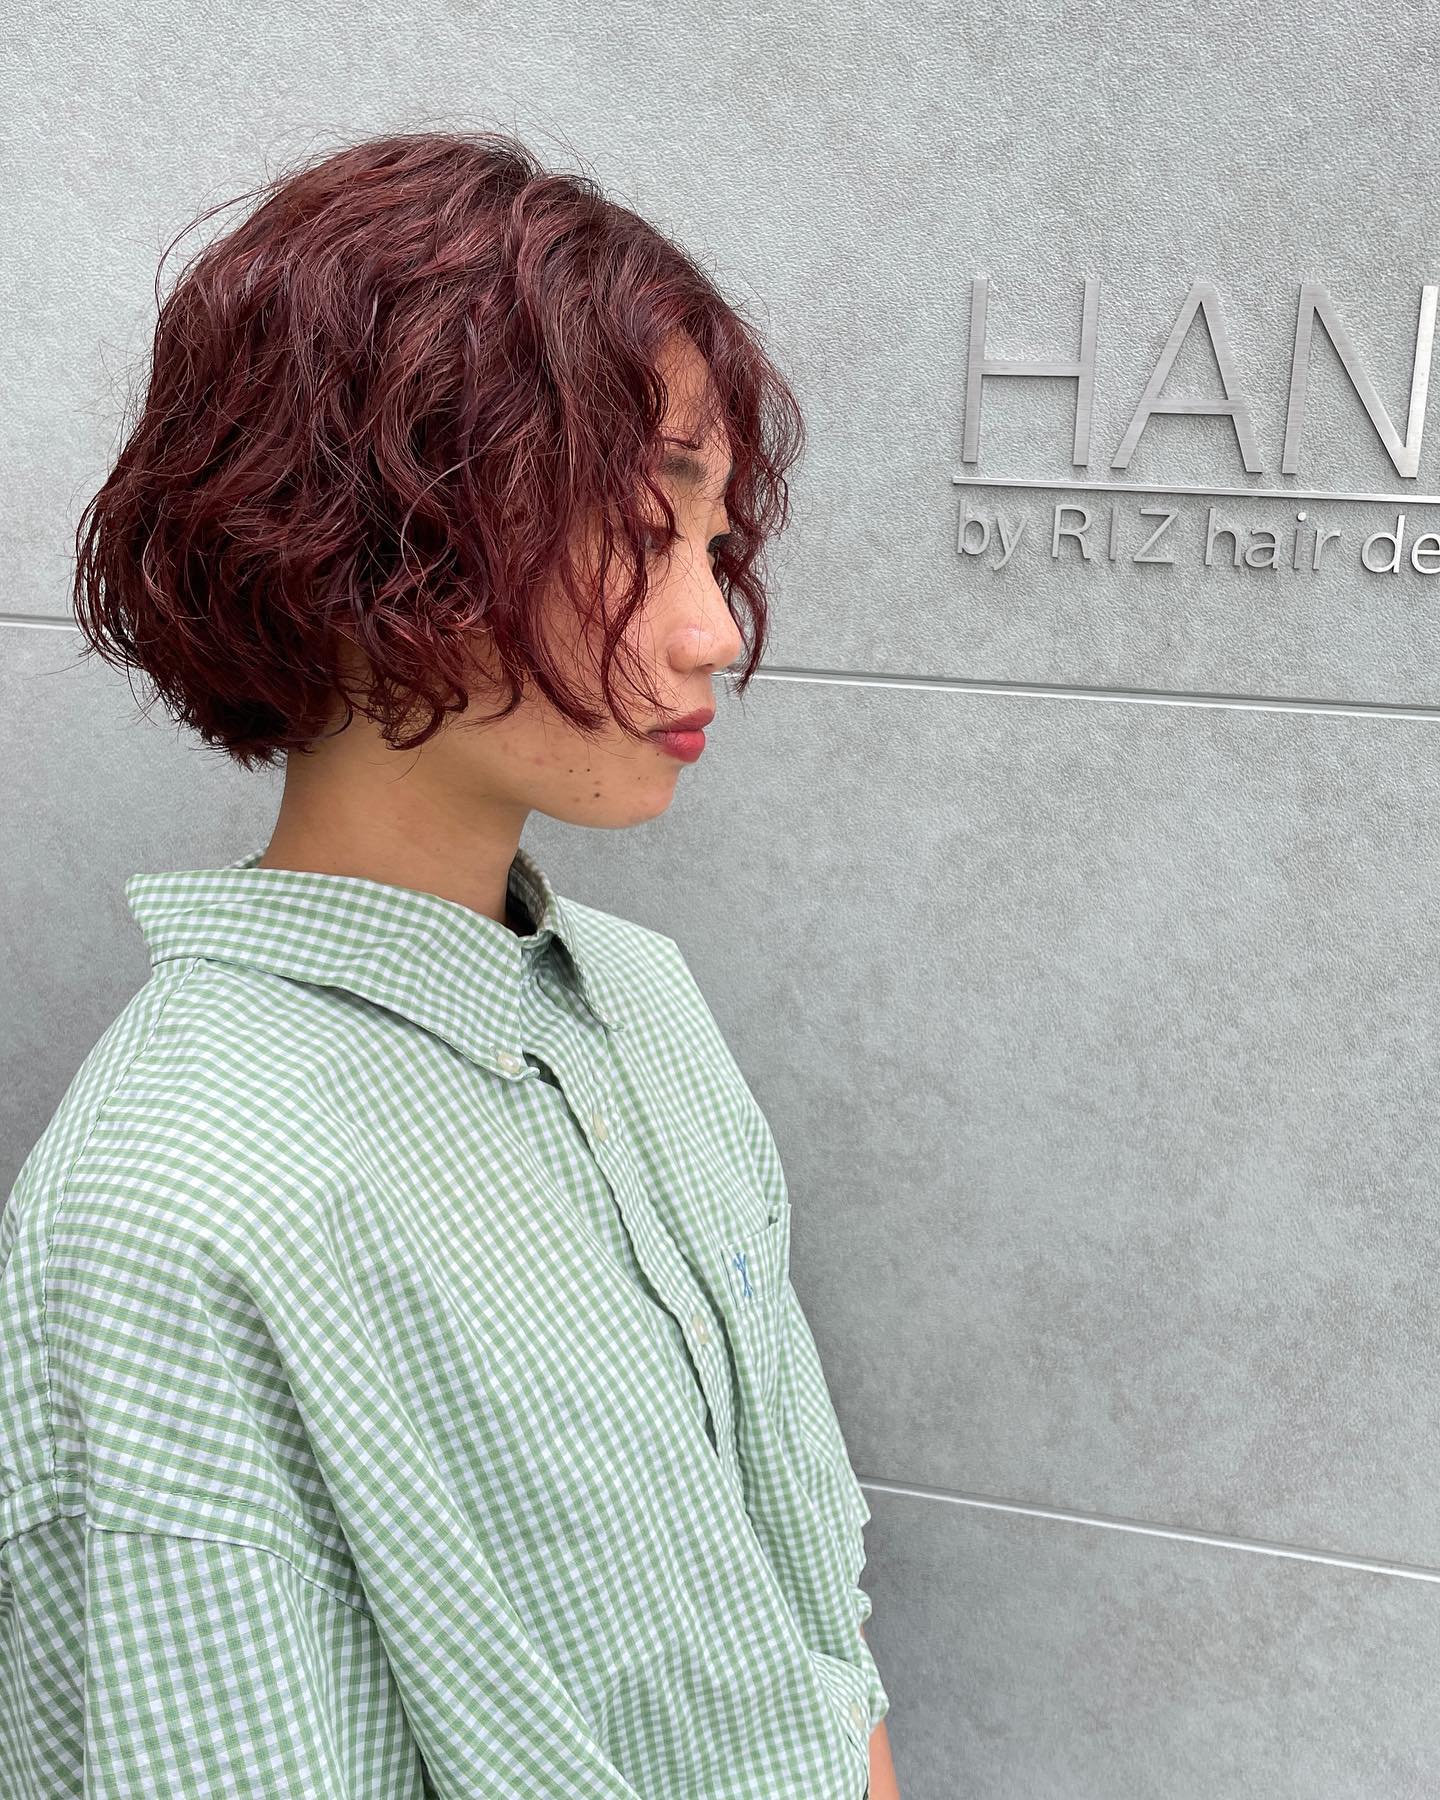 HANA by RIZ hairdesign